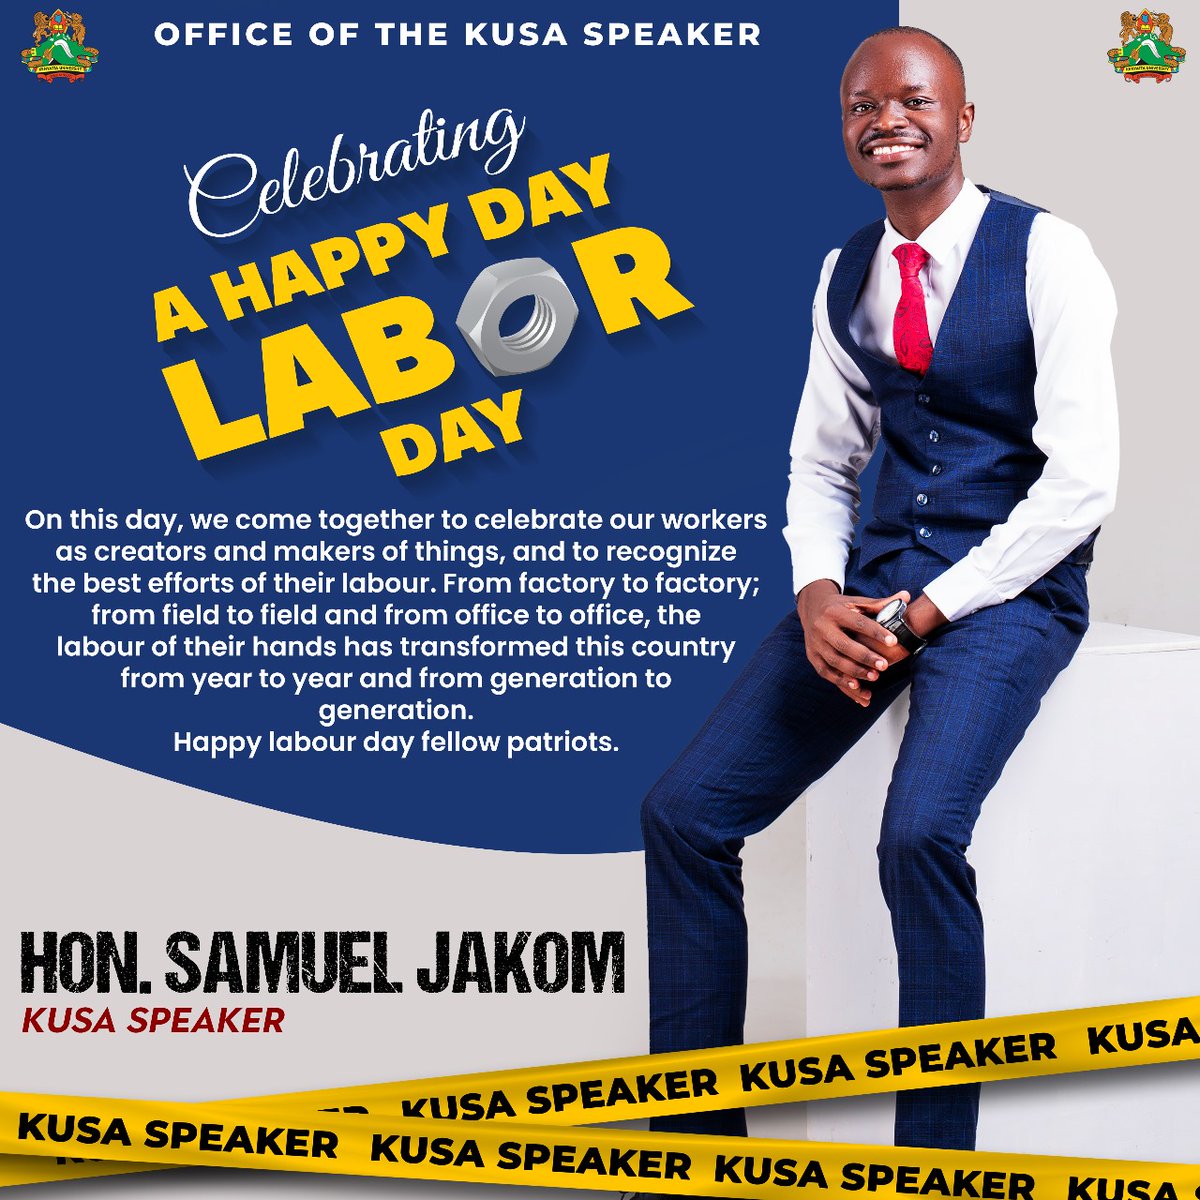 Happy Labor Day fellow Kenyans.

#Mombasaroad 
#KahawaSukari 
#willisraburu